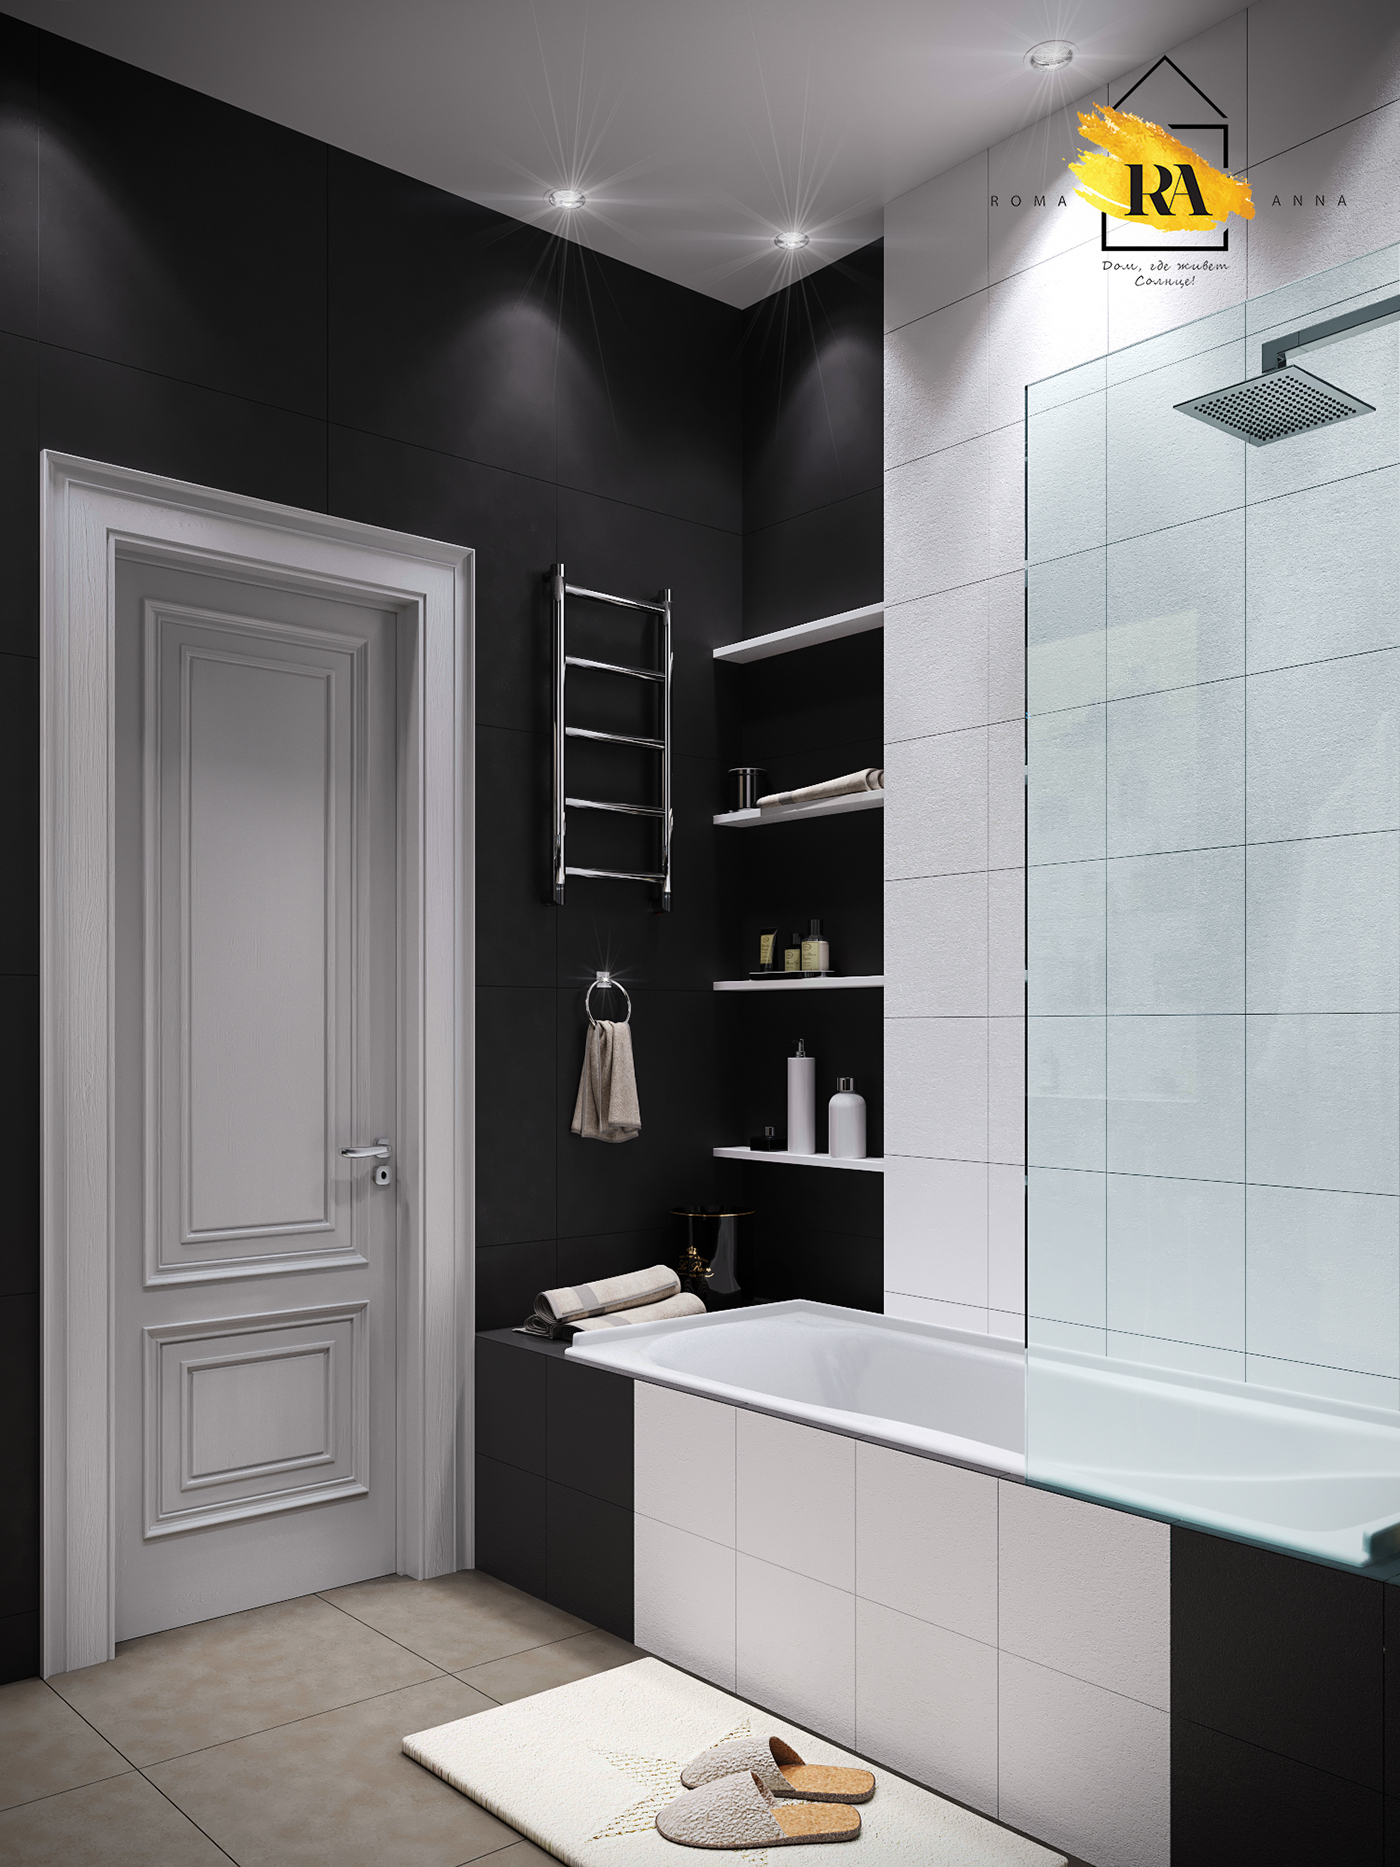 Bathroom visualization in 3d max corona render image